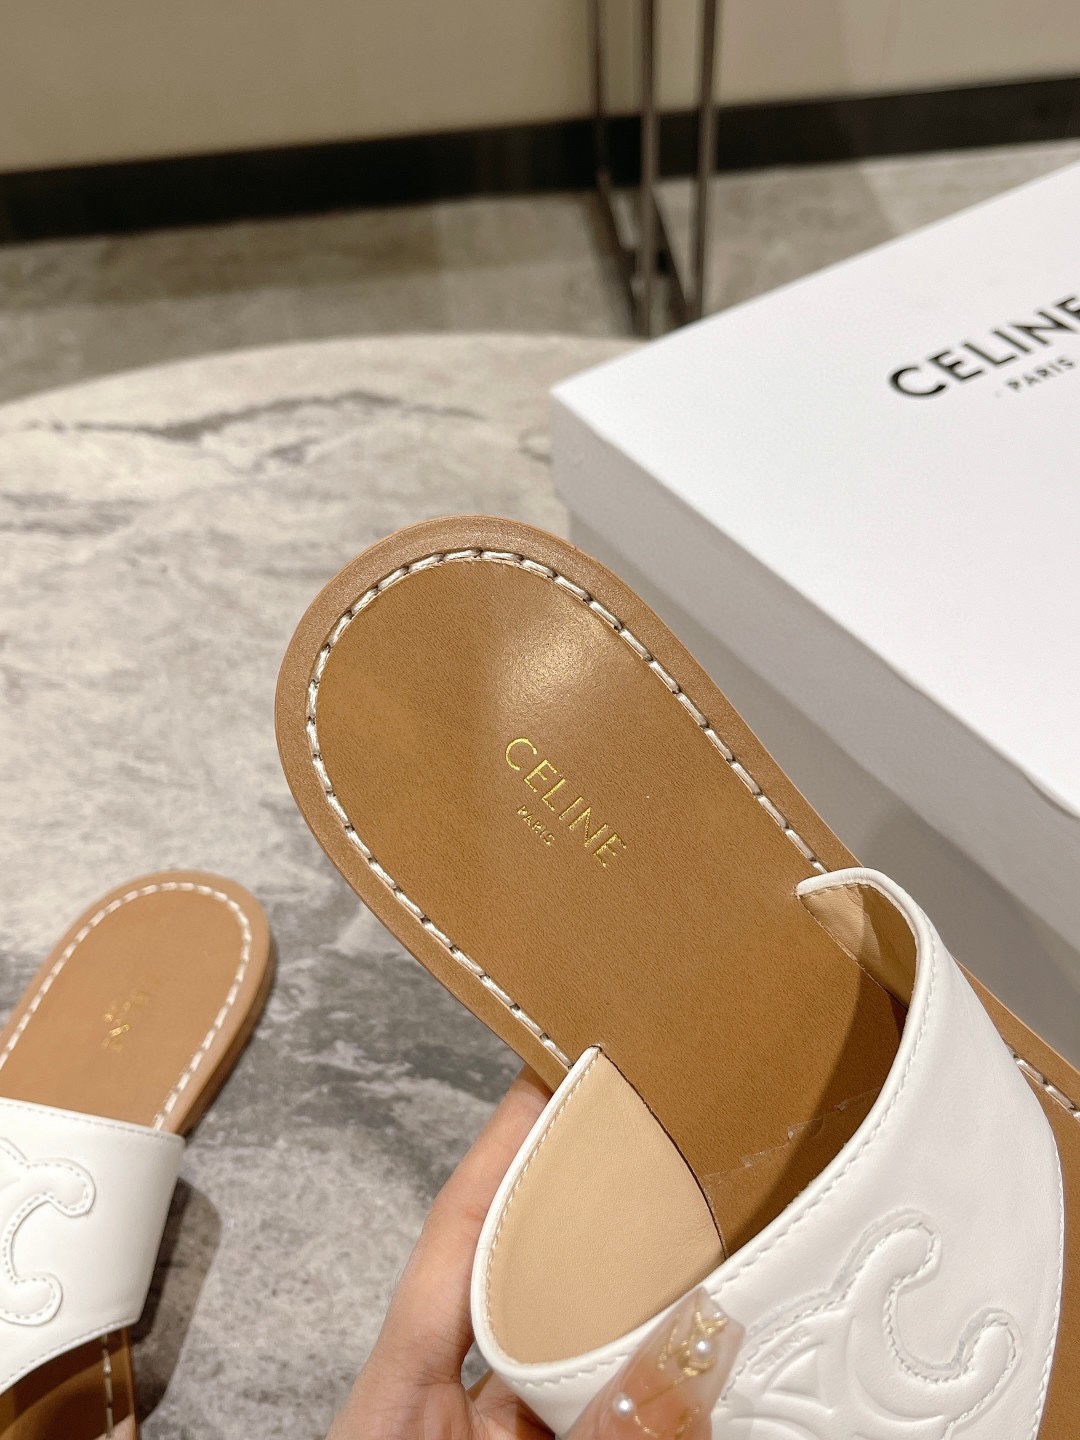 Celine思琳春夏最新款复古时髦凉鞋️夏天搭配袜子简直绝绝子了️复古的点上带上了满分时髦感颜值绝️原版